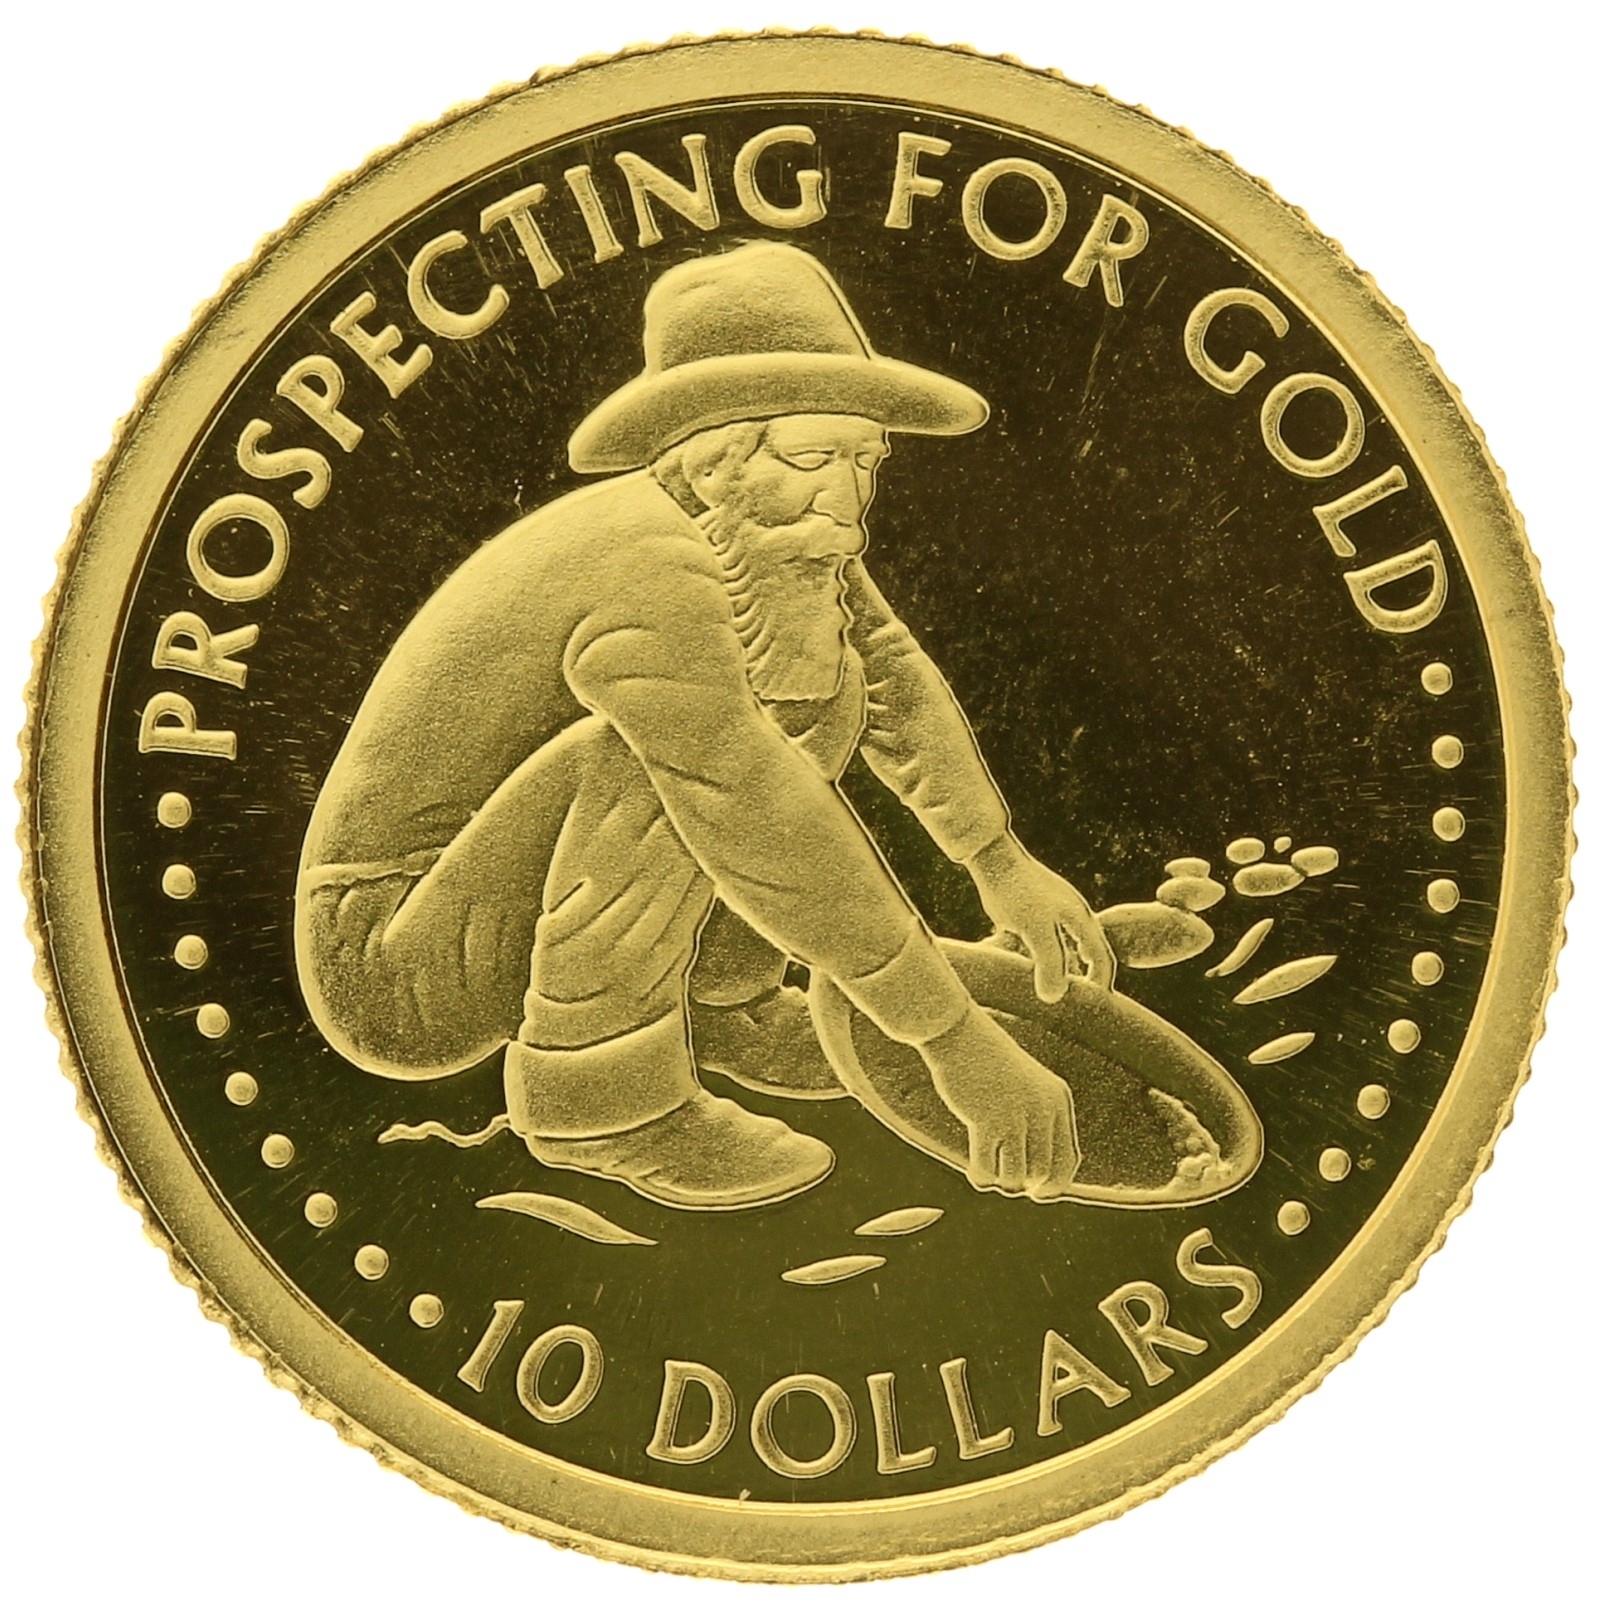 Solomon Islands - 10 dollars - 2005 - Prospecting for Gold - 1/25oz 